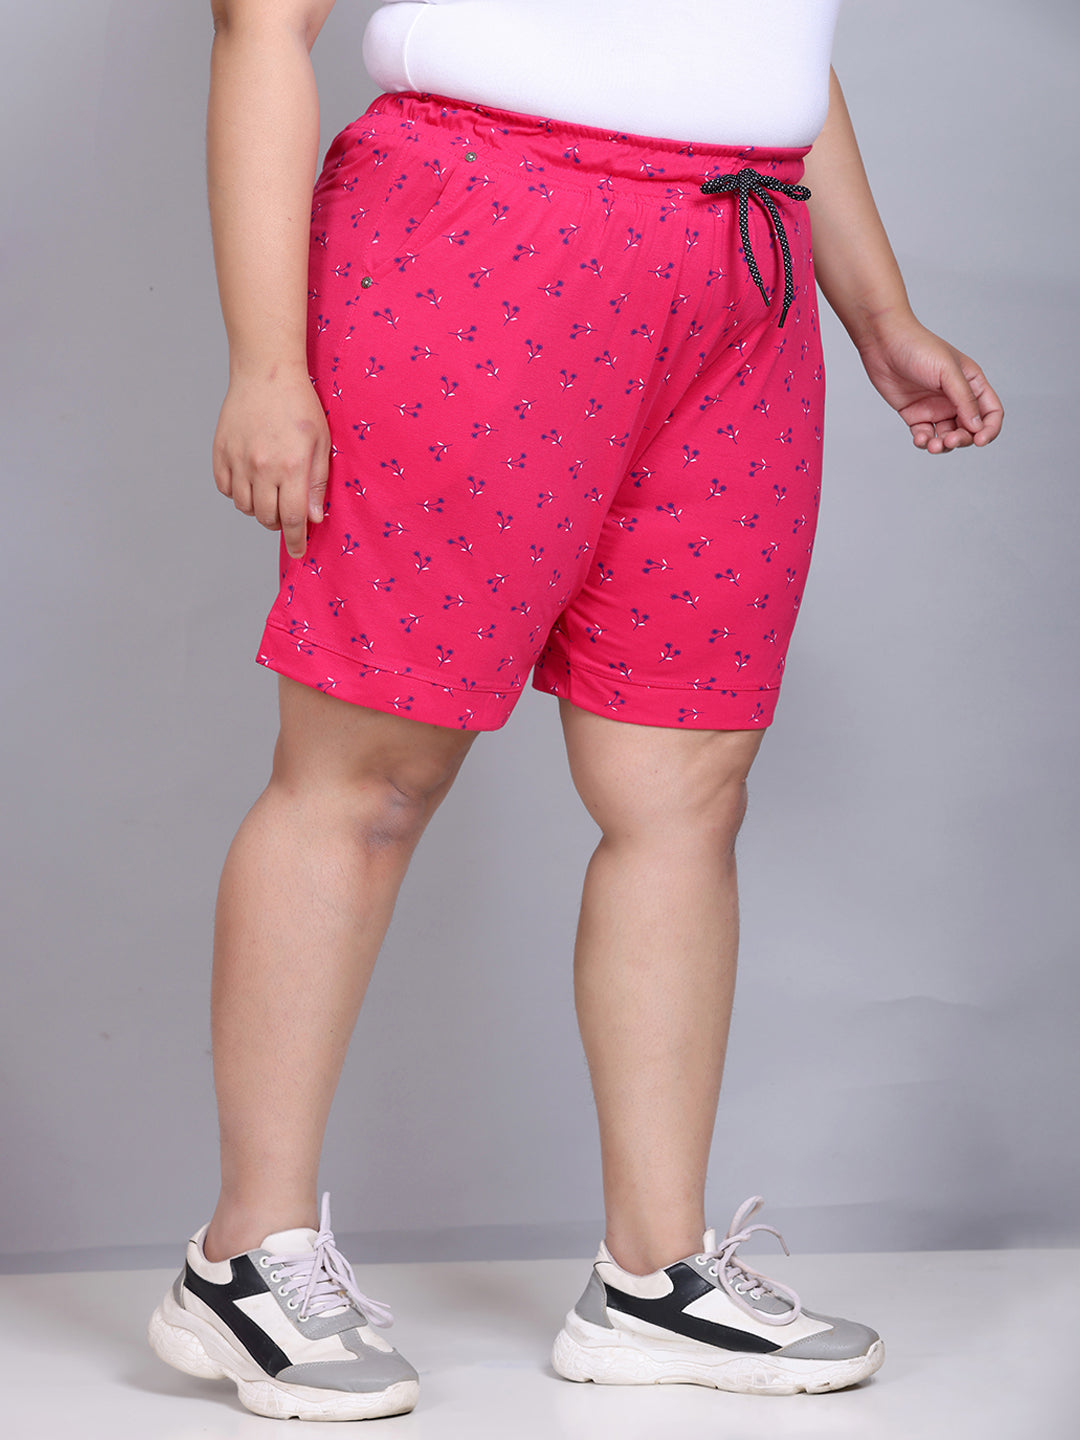 Plus Size Cotton Shorts For Women - Printed Bermuda - Pink